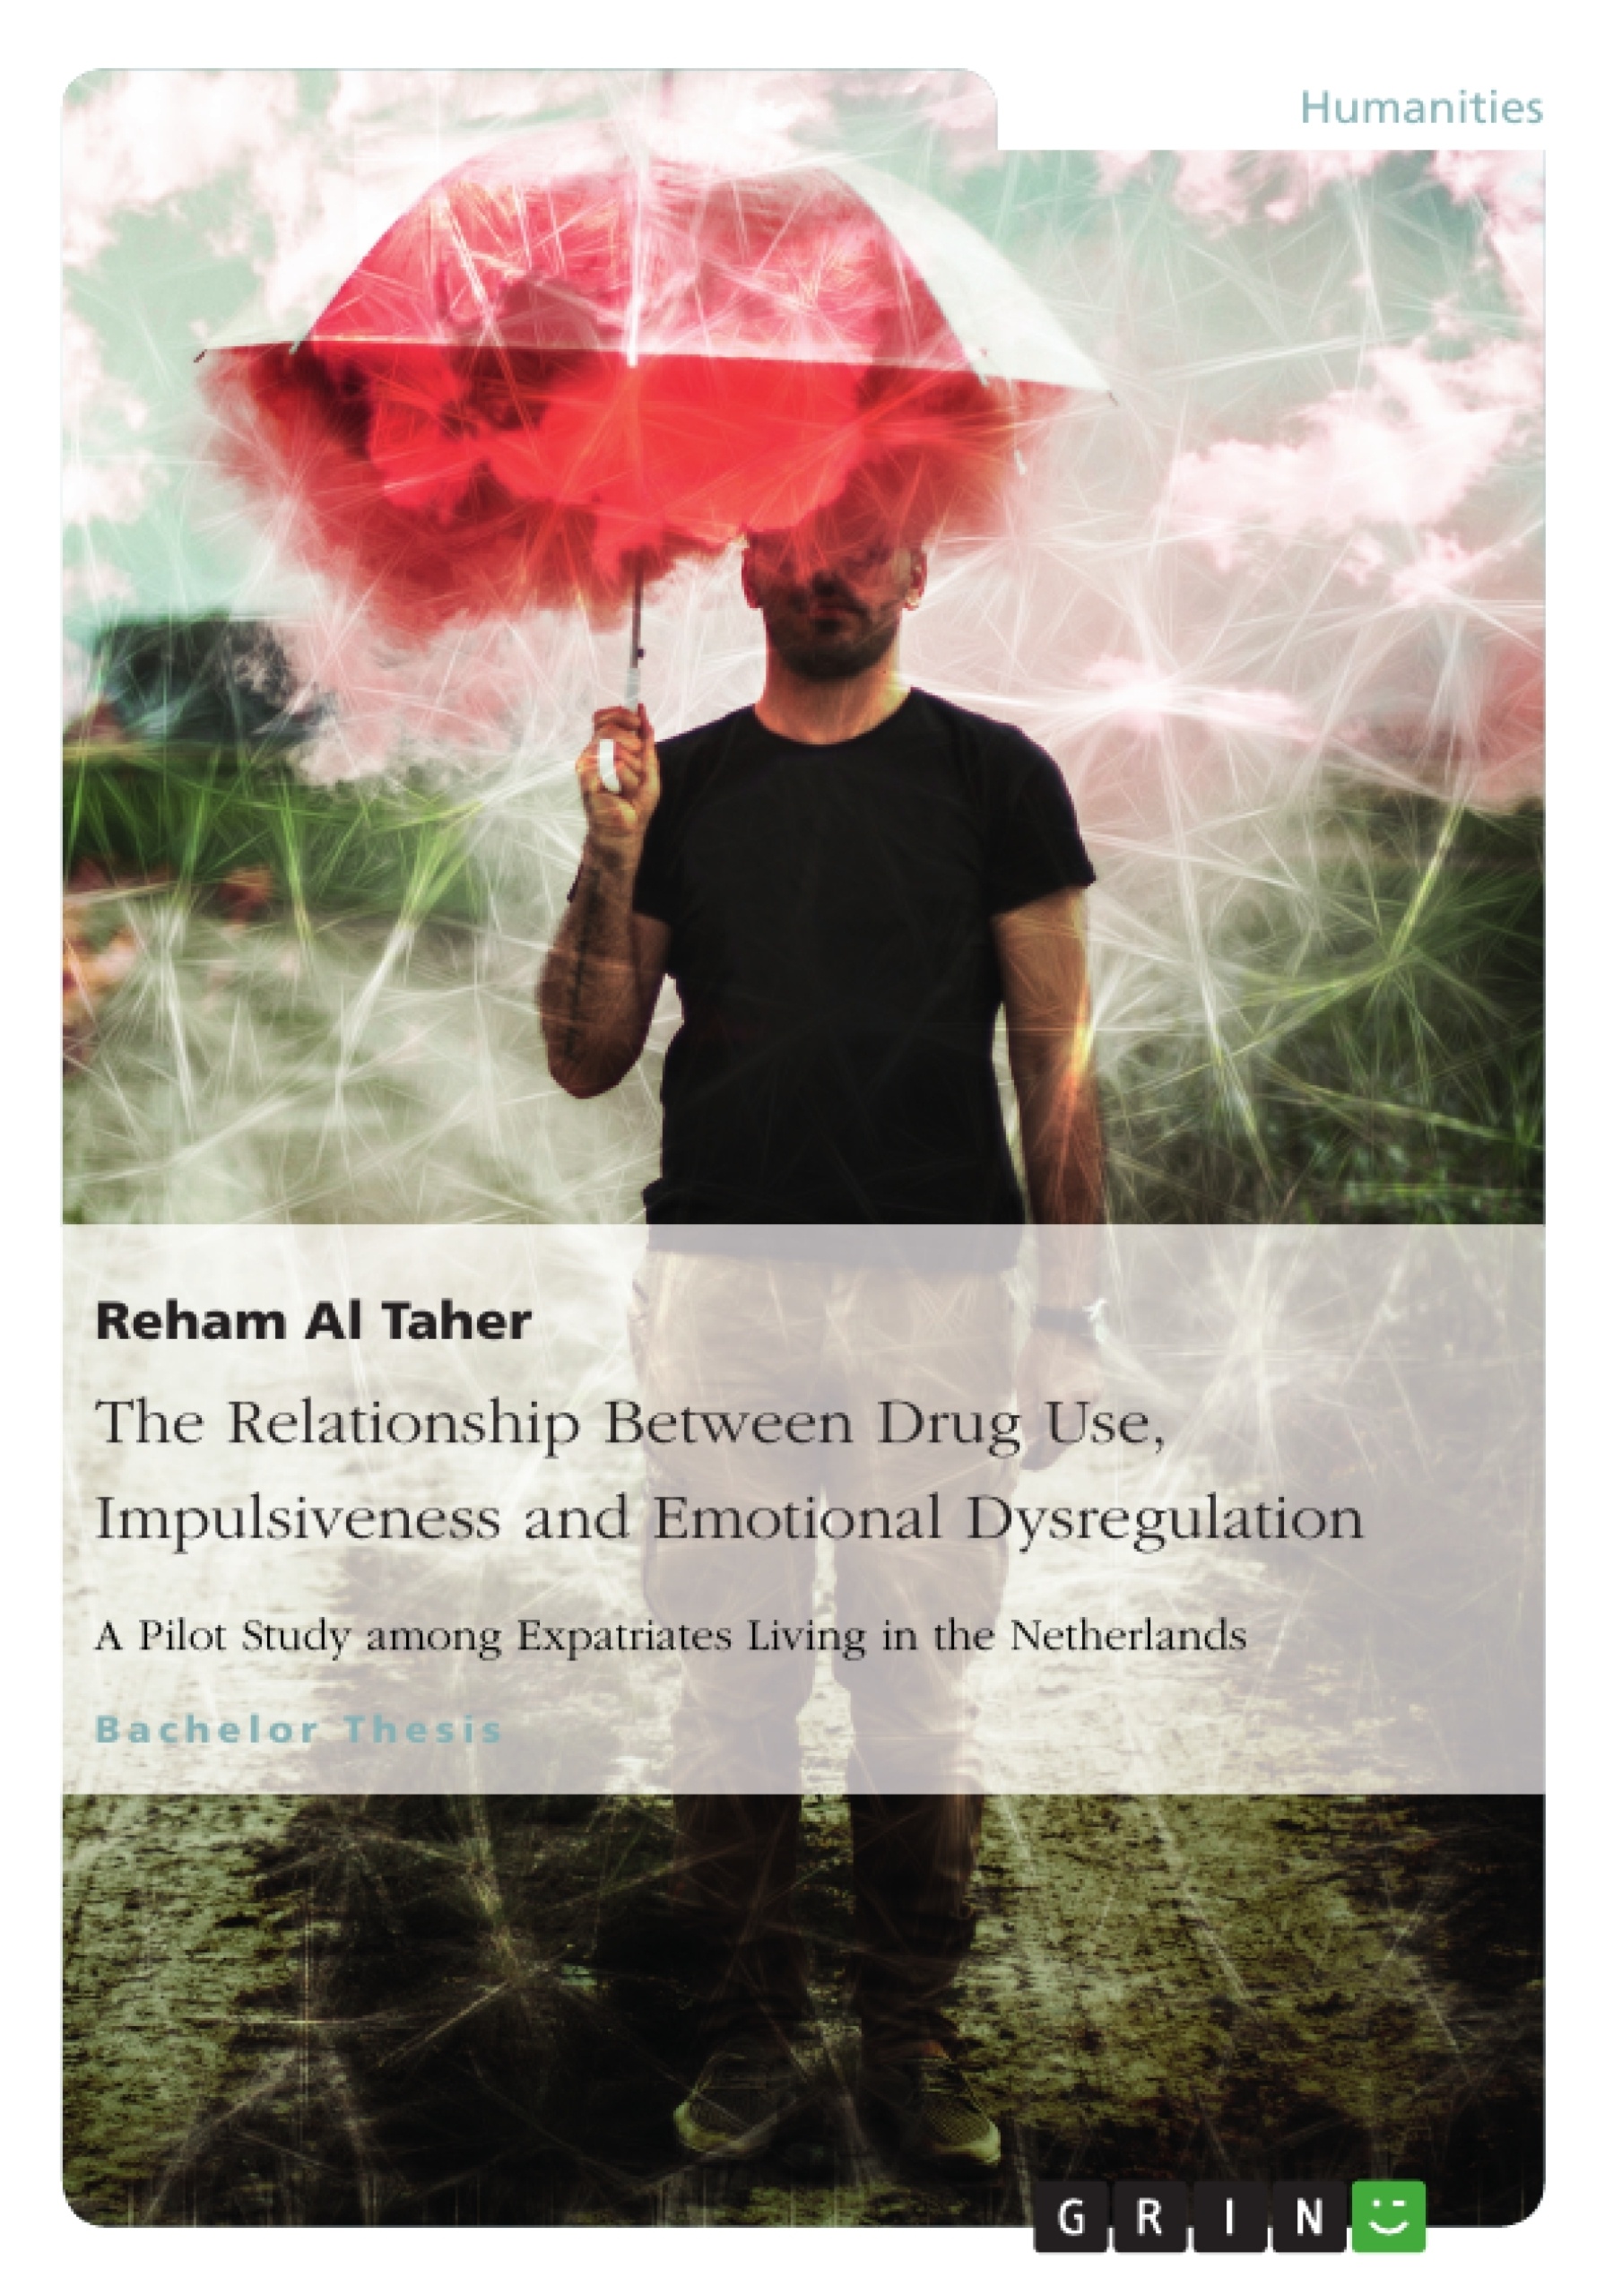 Title: The Relationship Between Drug Use, Impulsiveness and Emotional Dysregulation